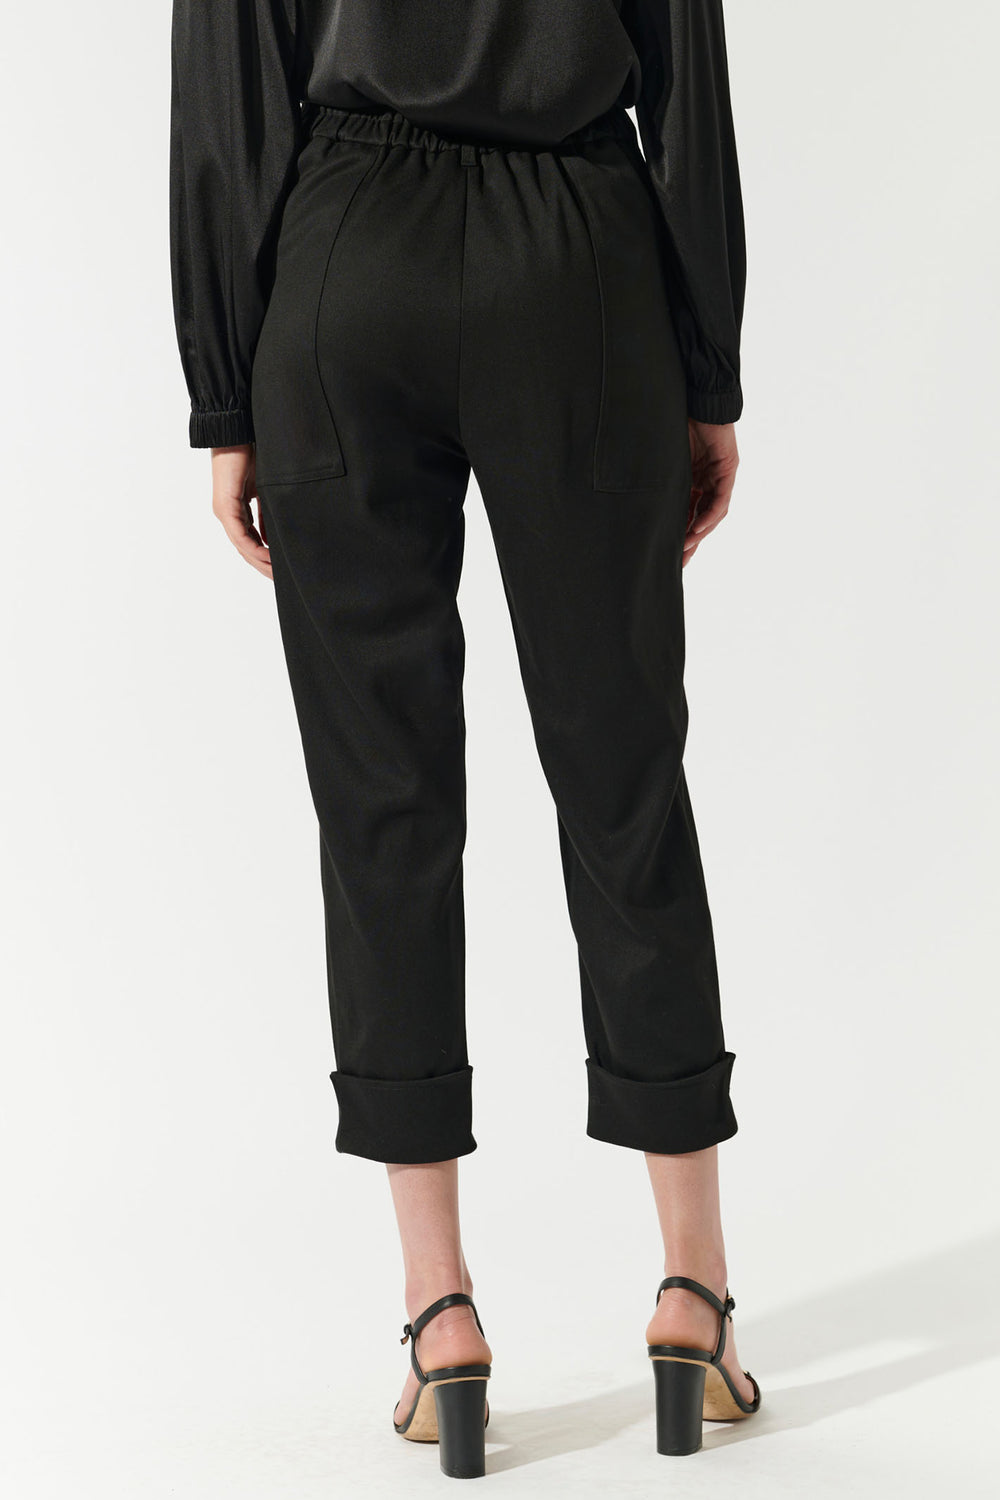 Dea Kudibal Cargonidea Trousers Black Pleat Detail 2660724 1000 - Olivia Grace Fashion